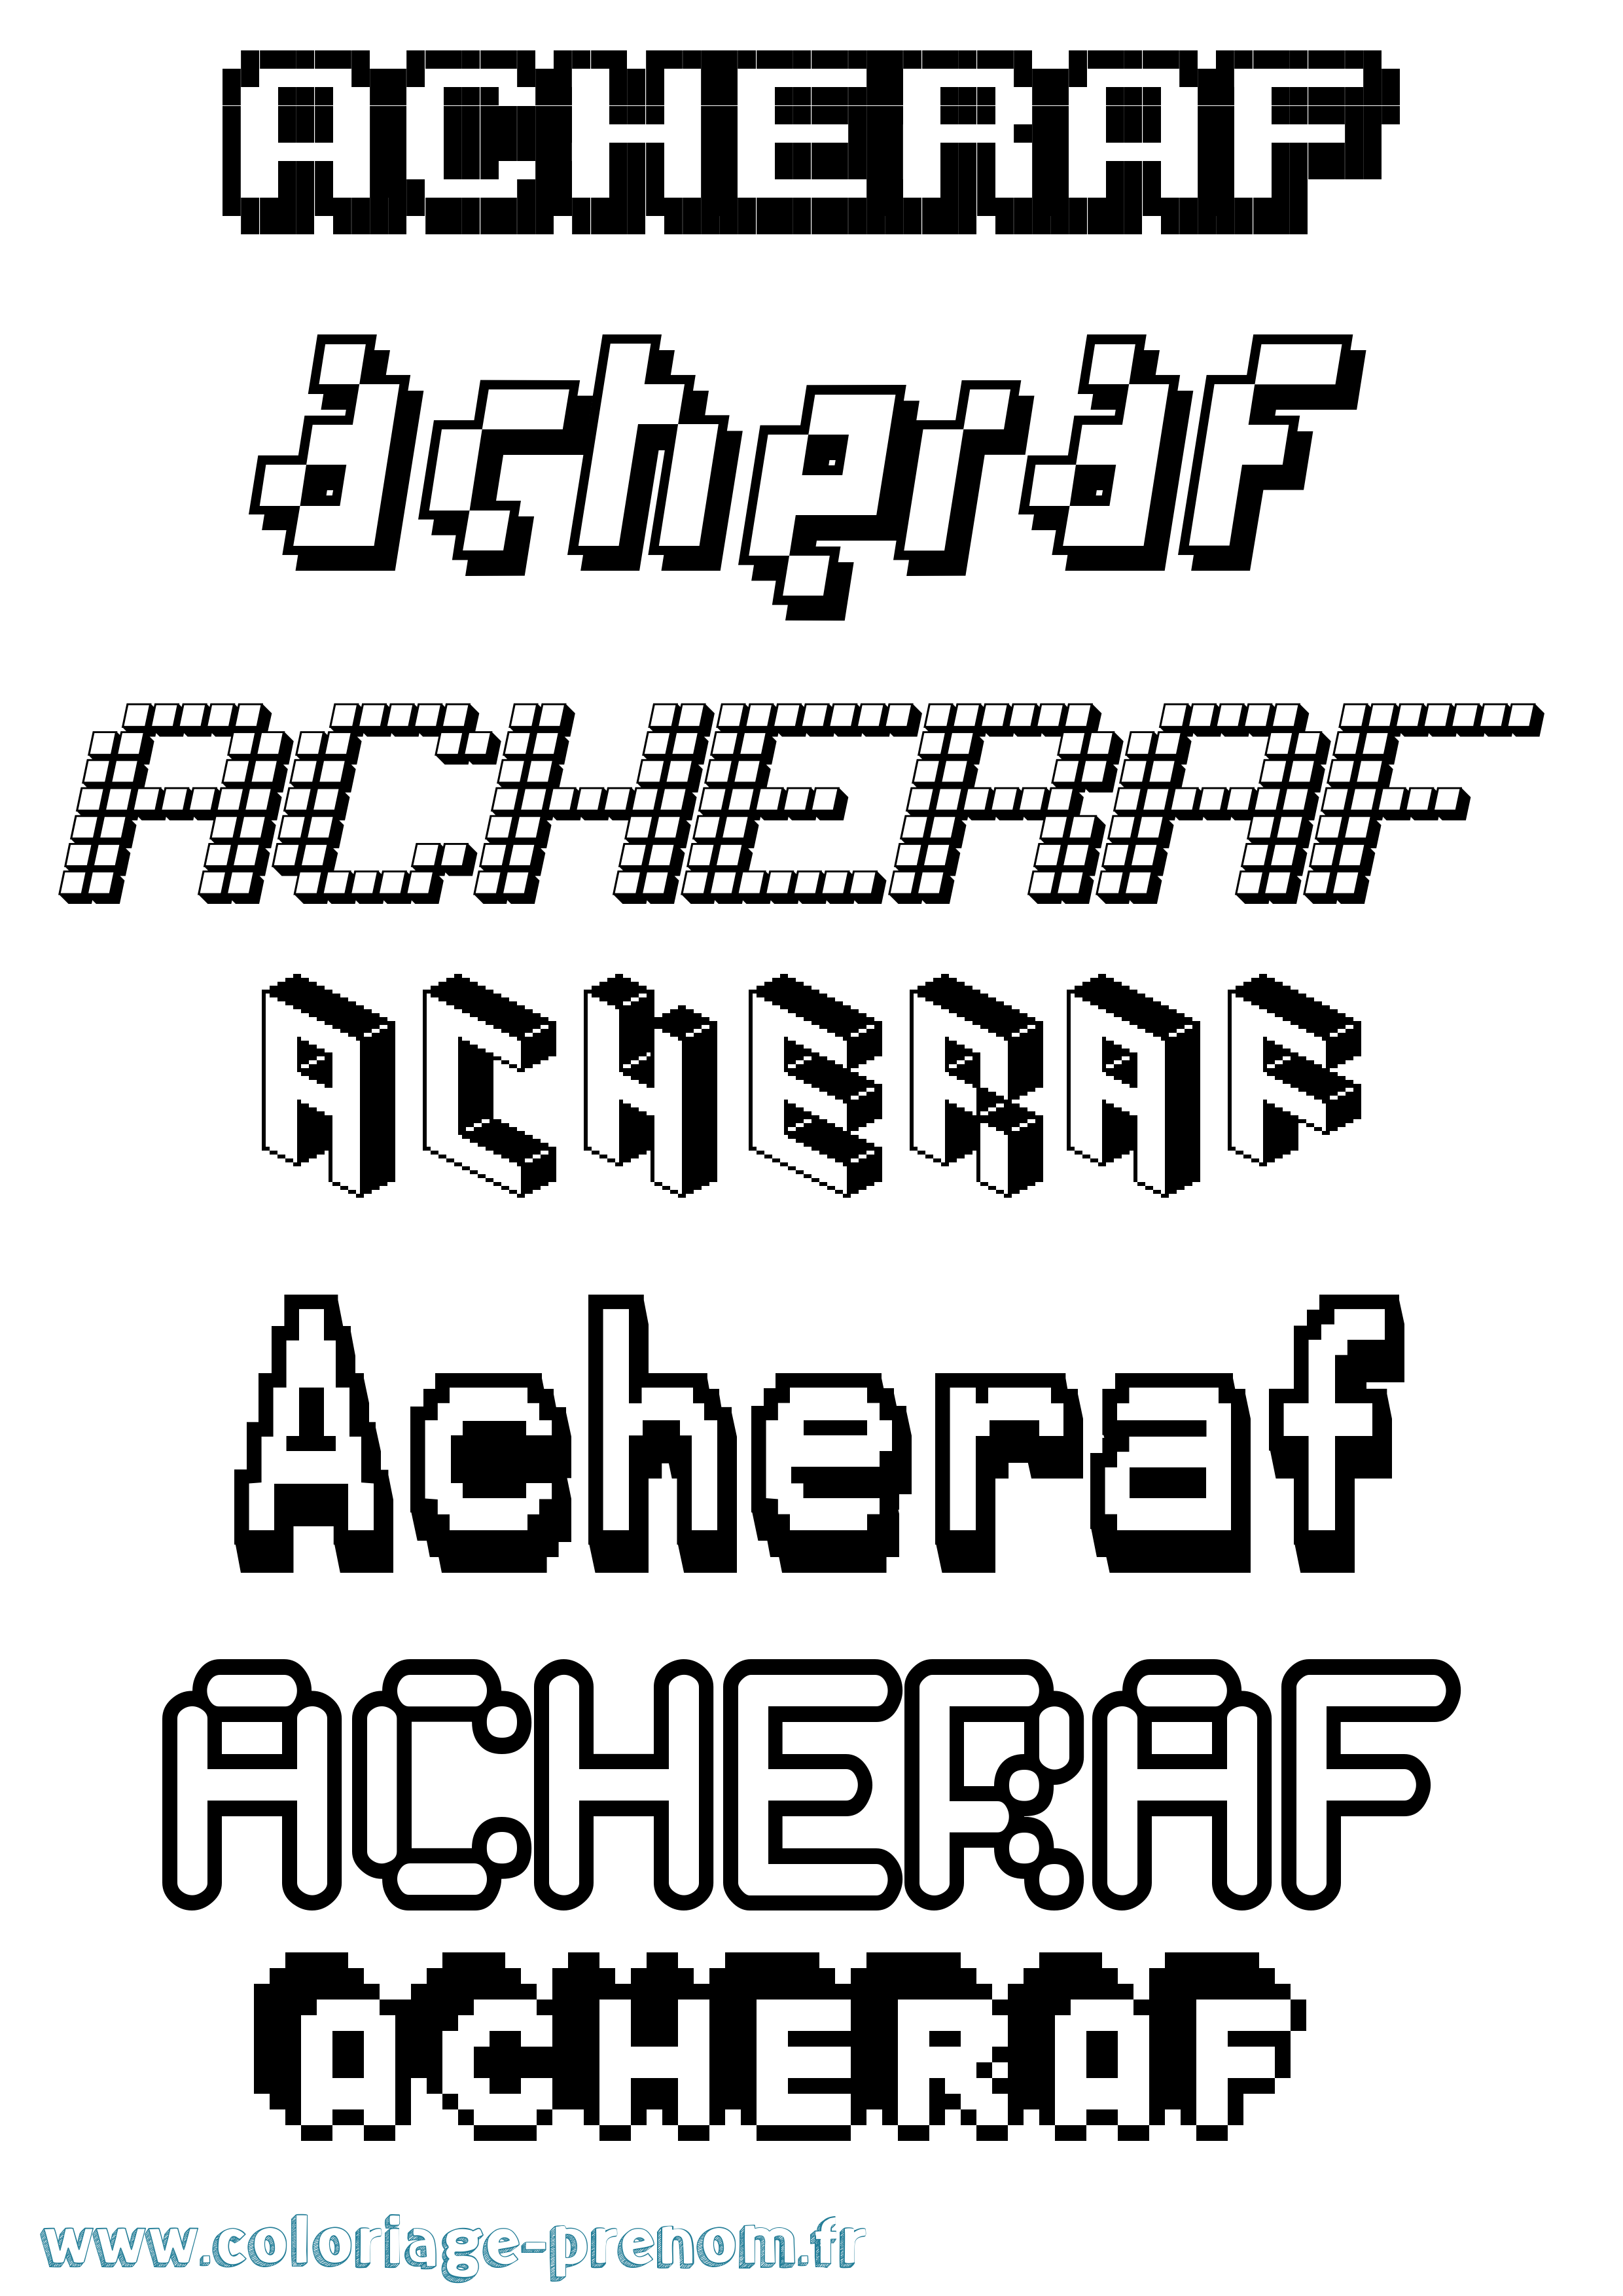 Coloriage prénom Acheraf Pixel